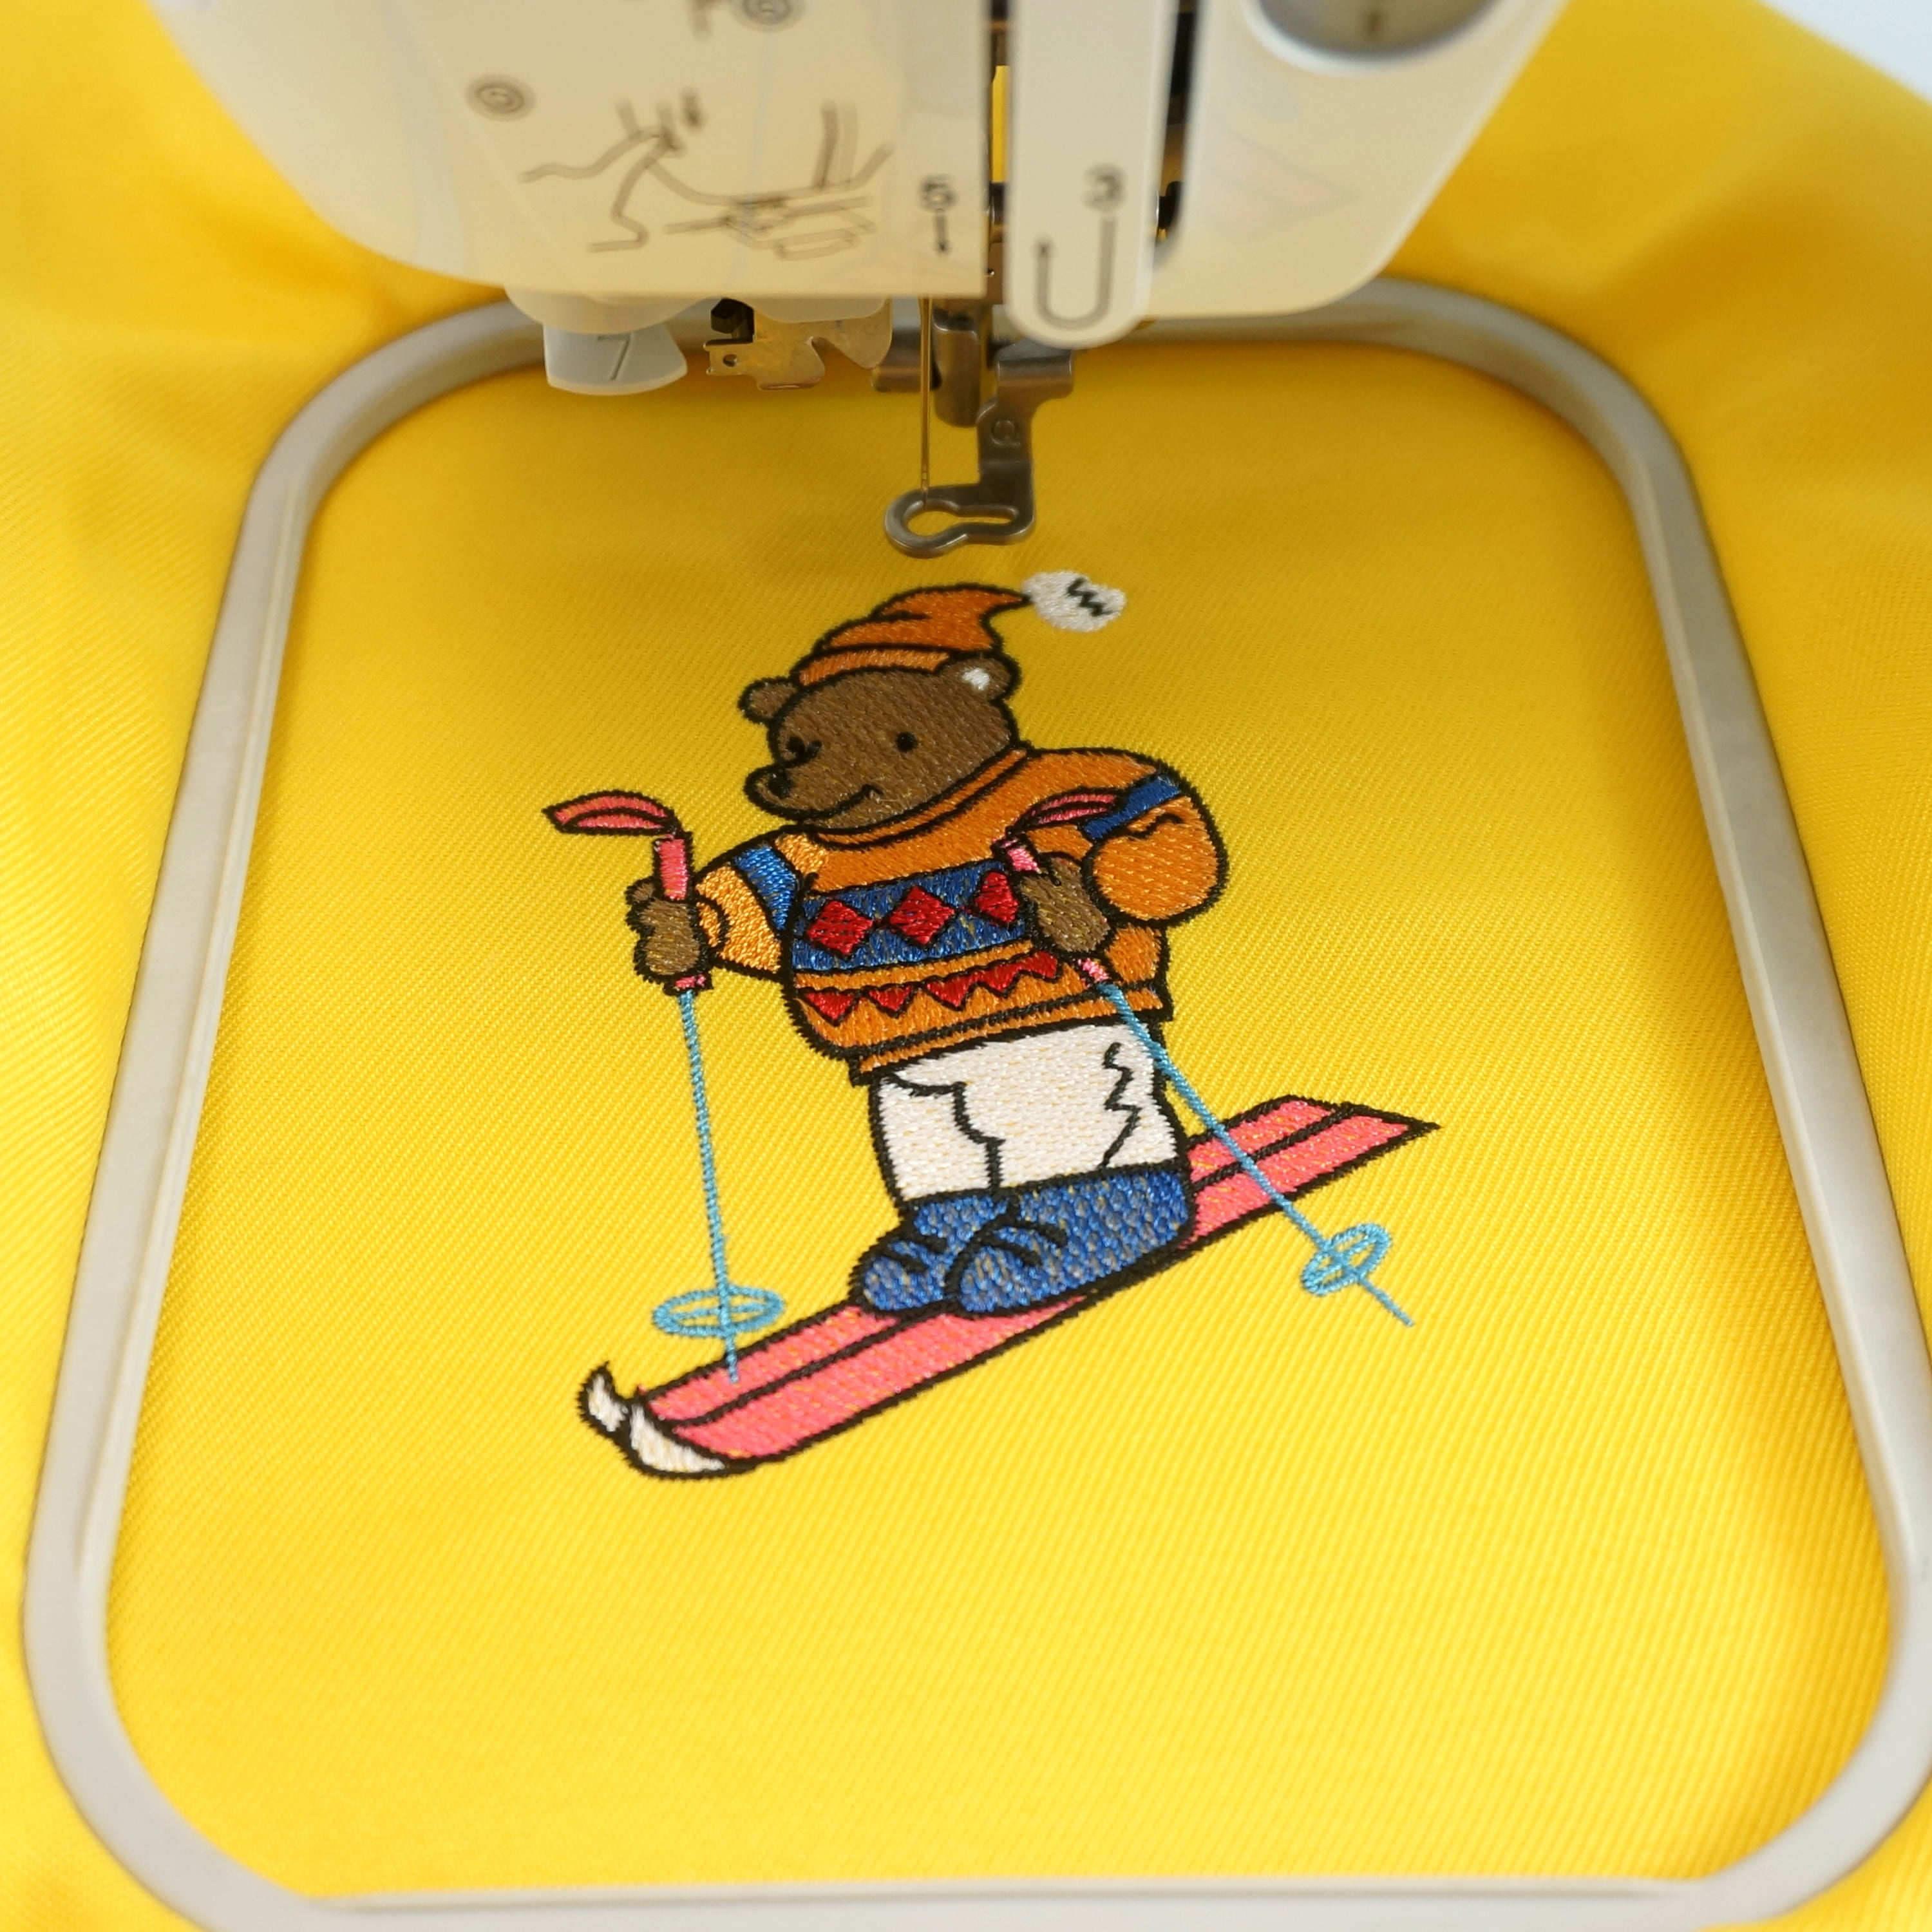 World Weidner Cut Away Machine Embroidery Stabilizer Backing 100 Precut Sheets 8x8 Medium Weight 2.5 Ounce Fits 4x4 Hoops